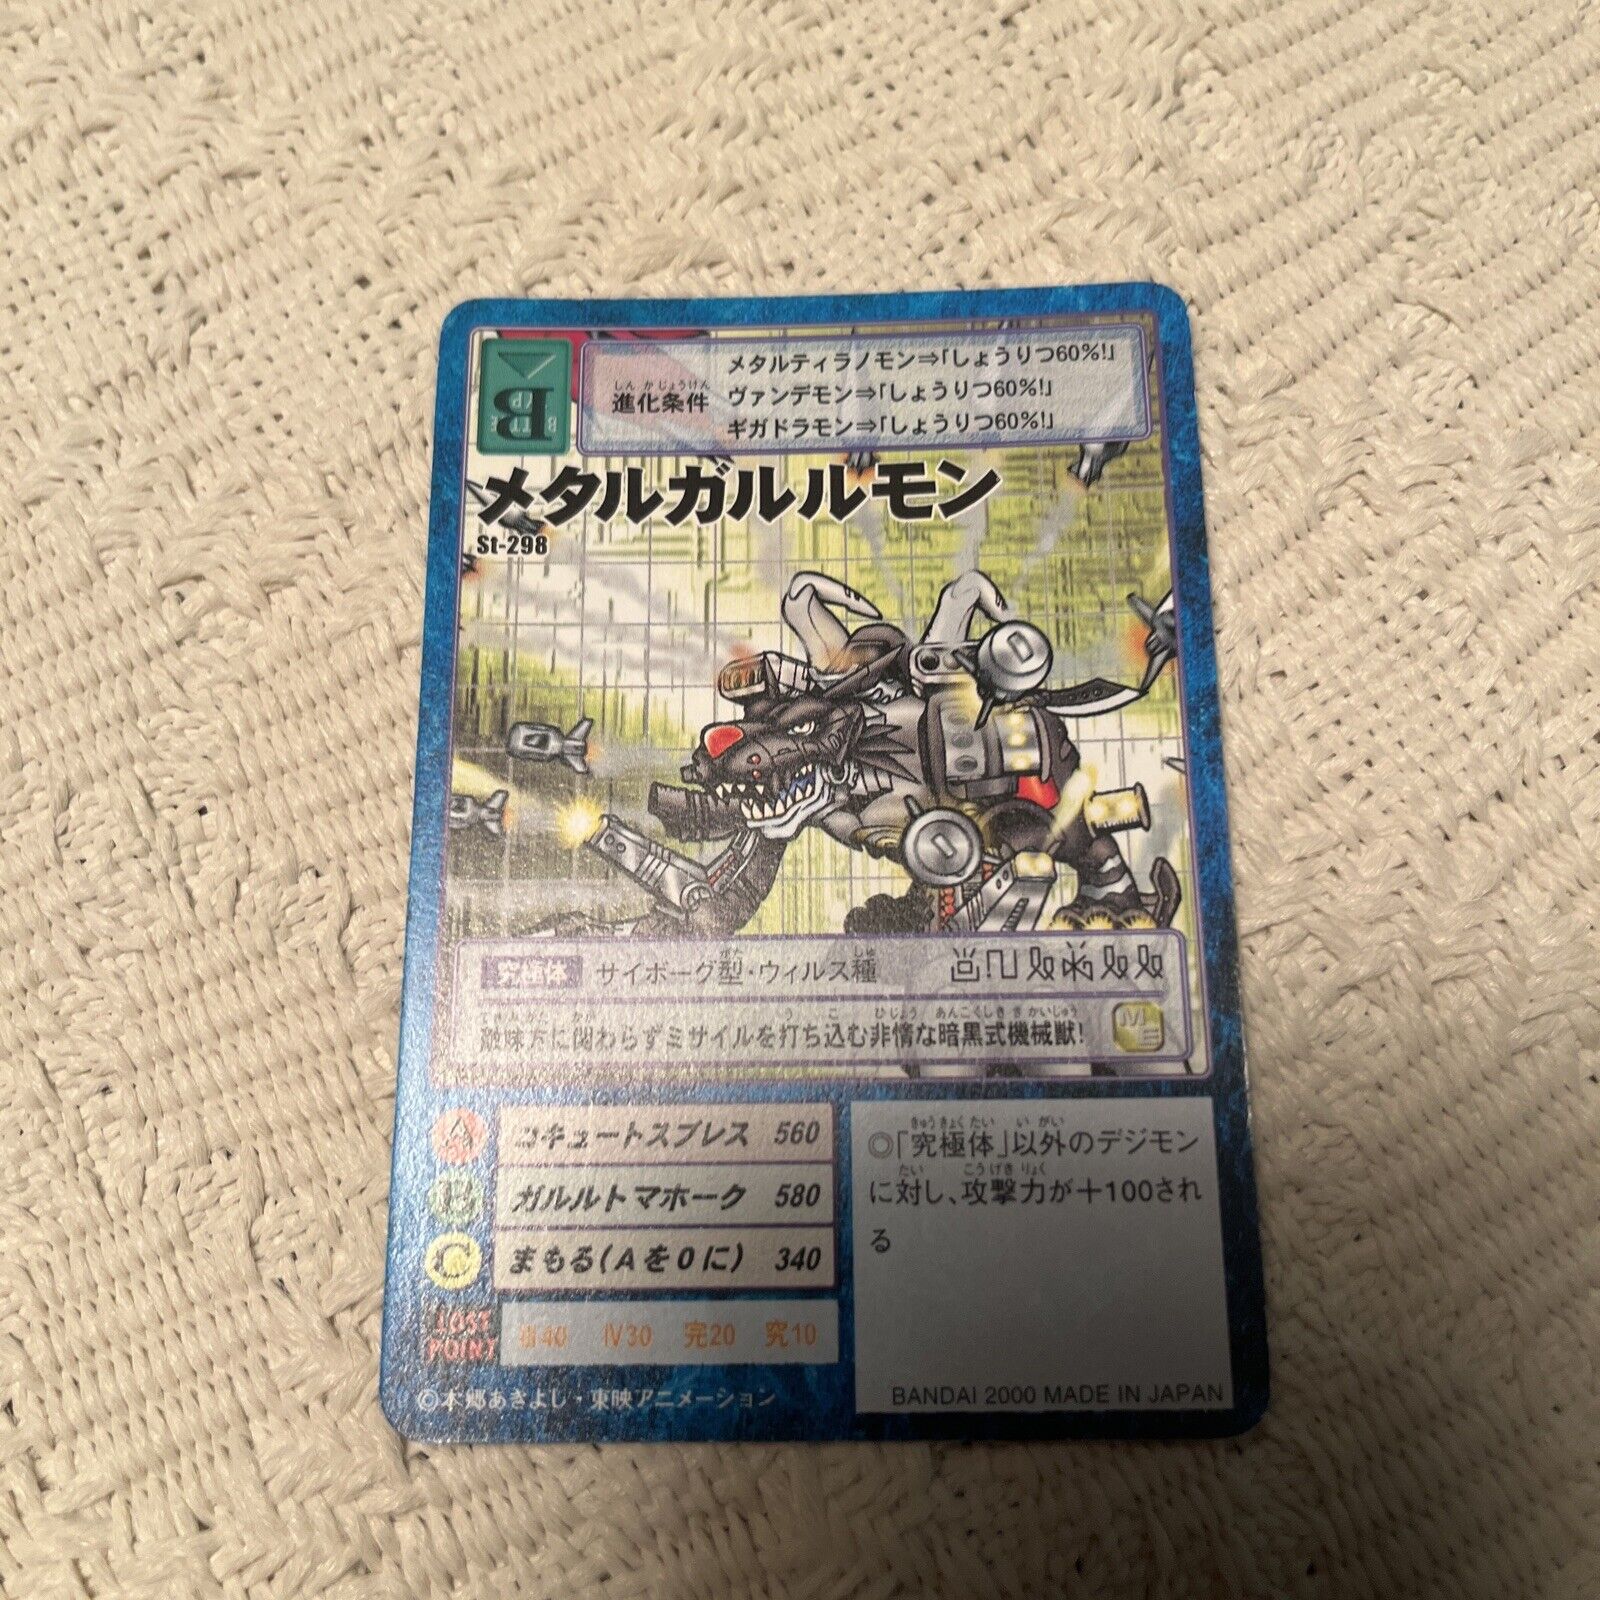 St-298 Metalgarurumon Digimon Card Vintage initial Bandai 2000 Japan